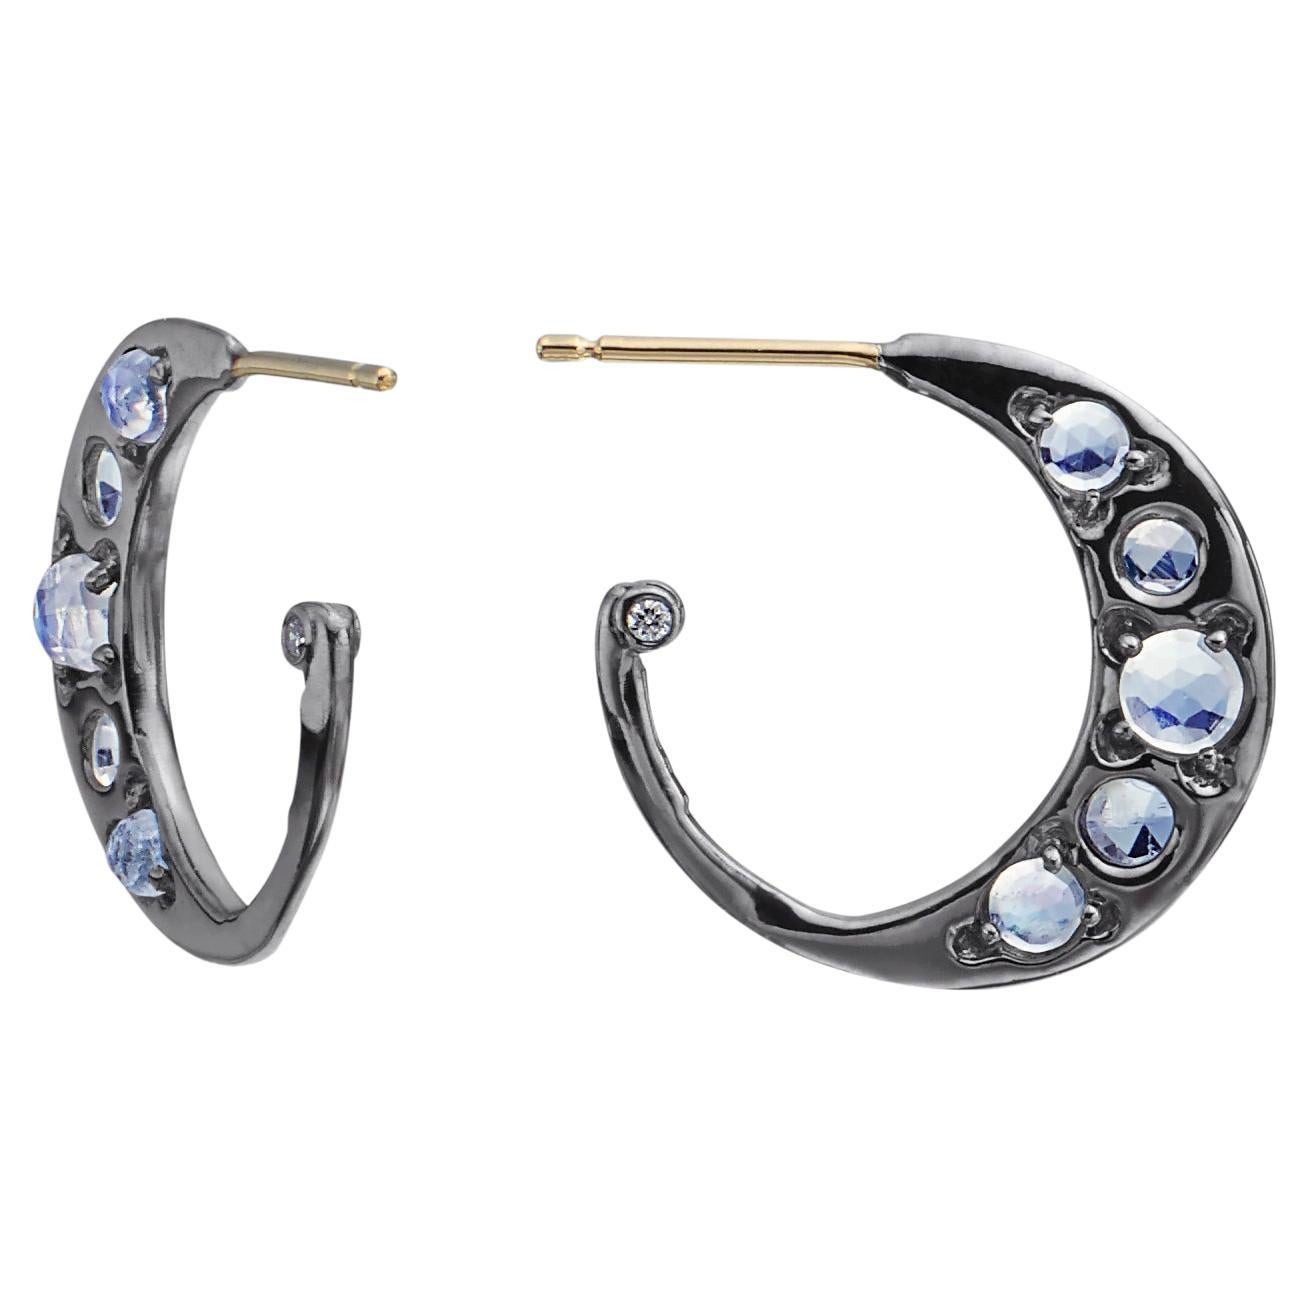 Sterling Silver Hoop Smaller Earrings with Rose Cut Moonstone w/ 14kt post